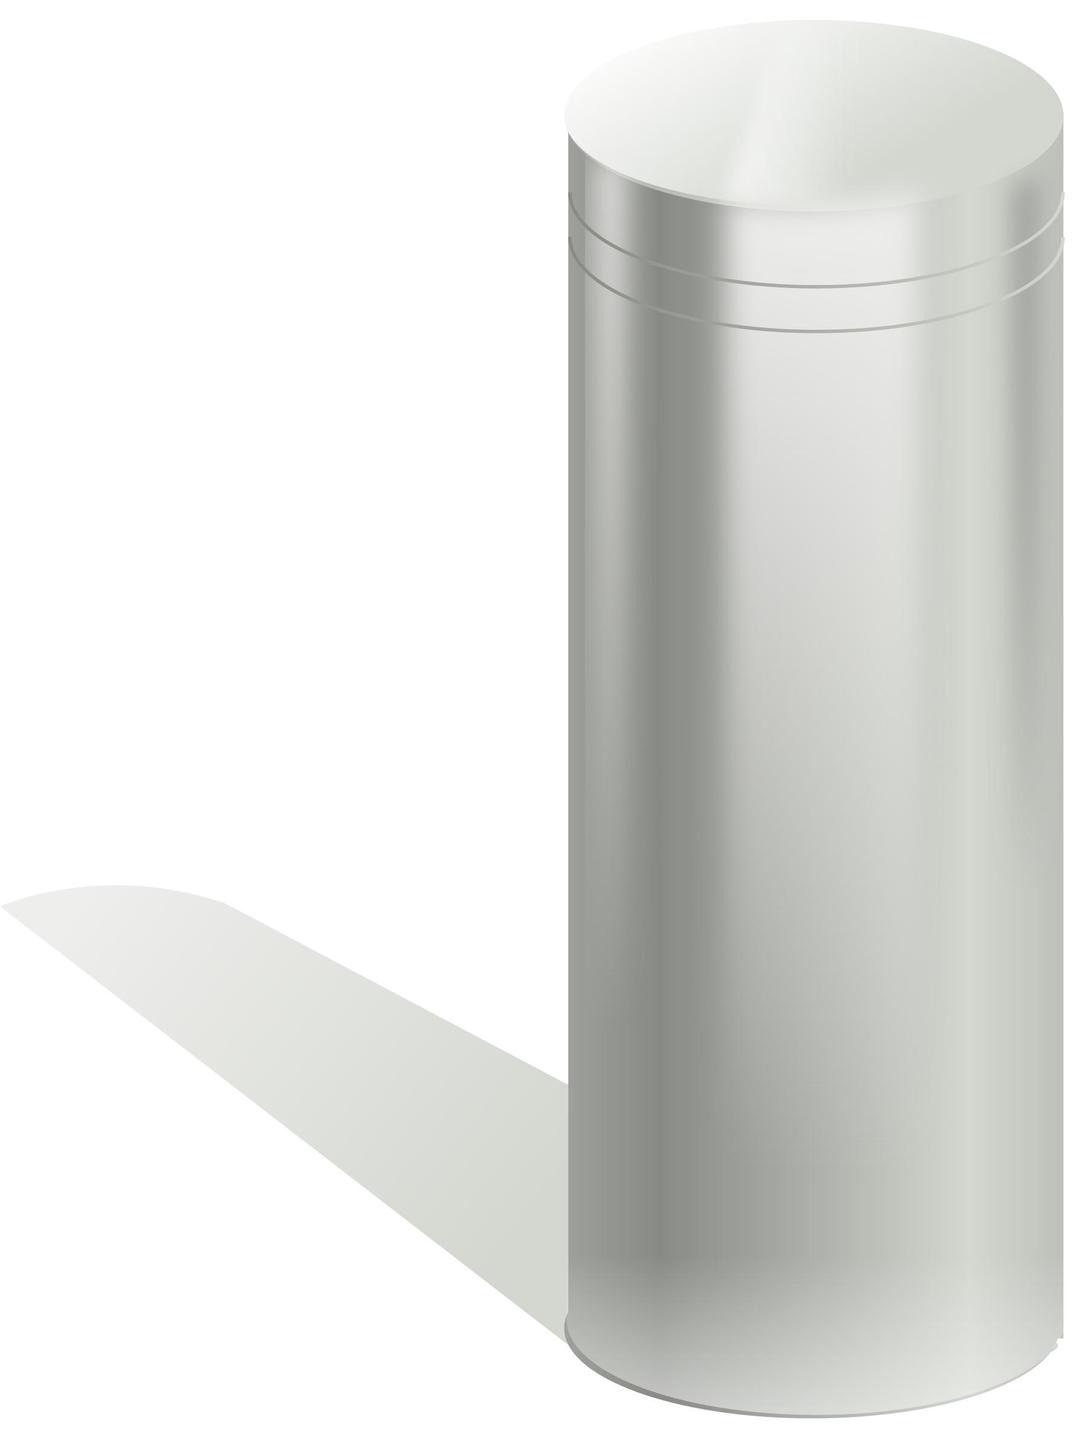 metallic tube png transparent